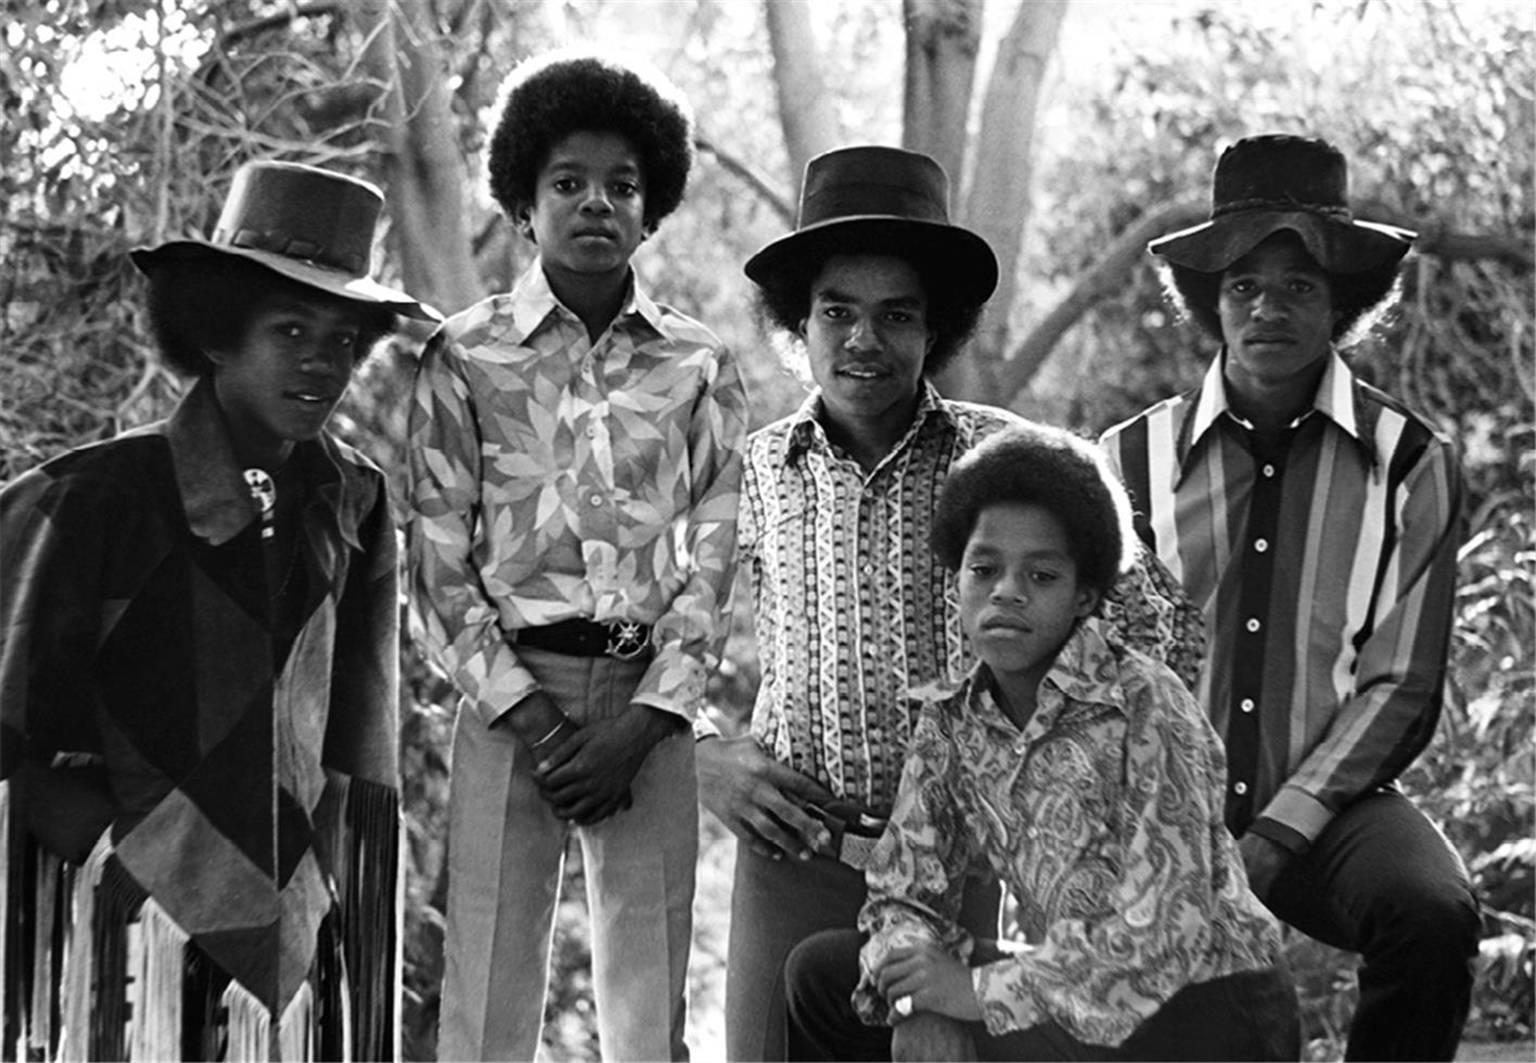 John R. Hamilton Black and White Photograph - The Jackson 5, at home, Encino, California, 1974